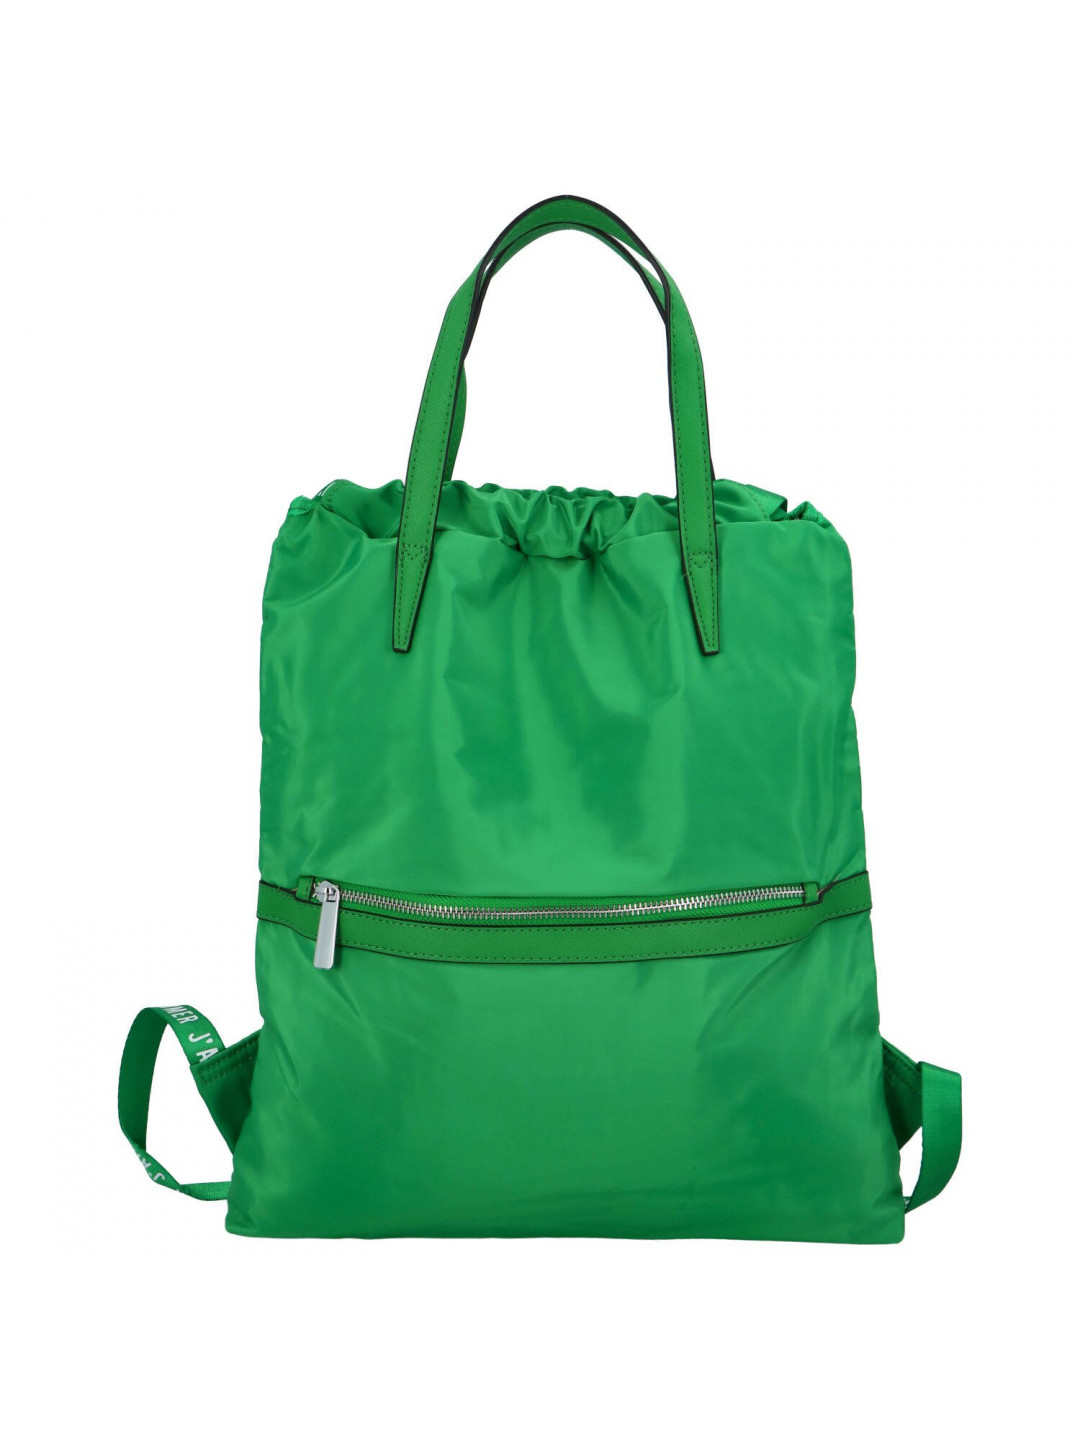 Dámský batoh zelený – Paolo bags Taigo